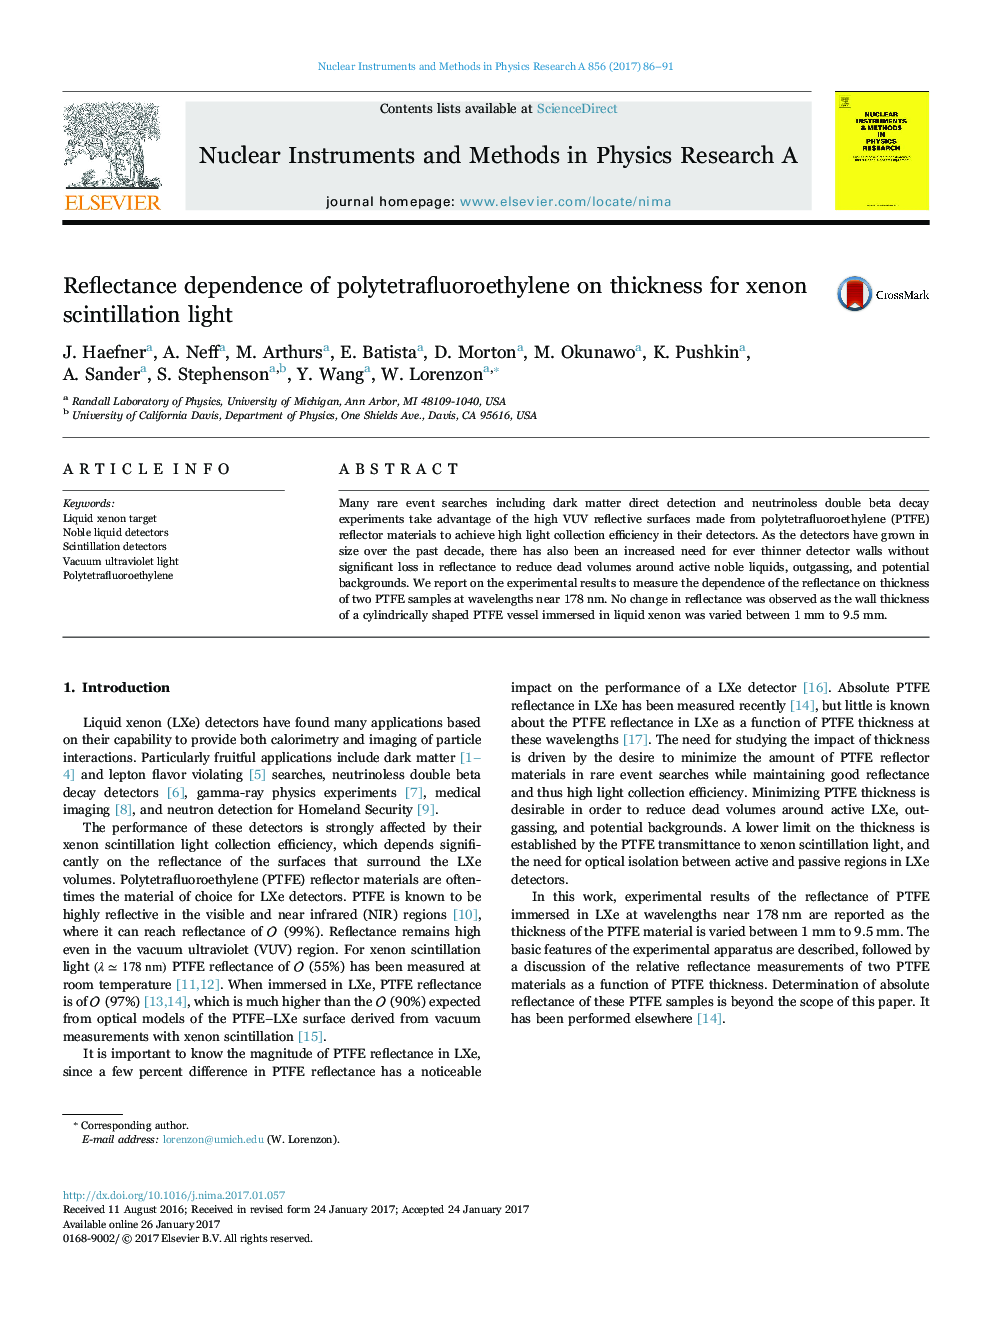 Reflectance dependence of polytetrafluoroethylene on thickness for xenon scintillation light